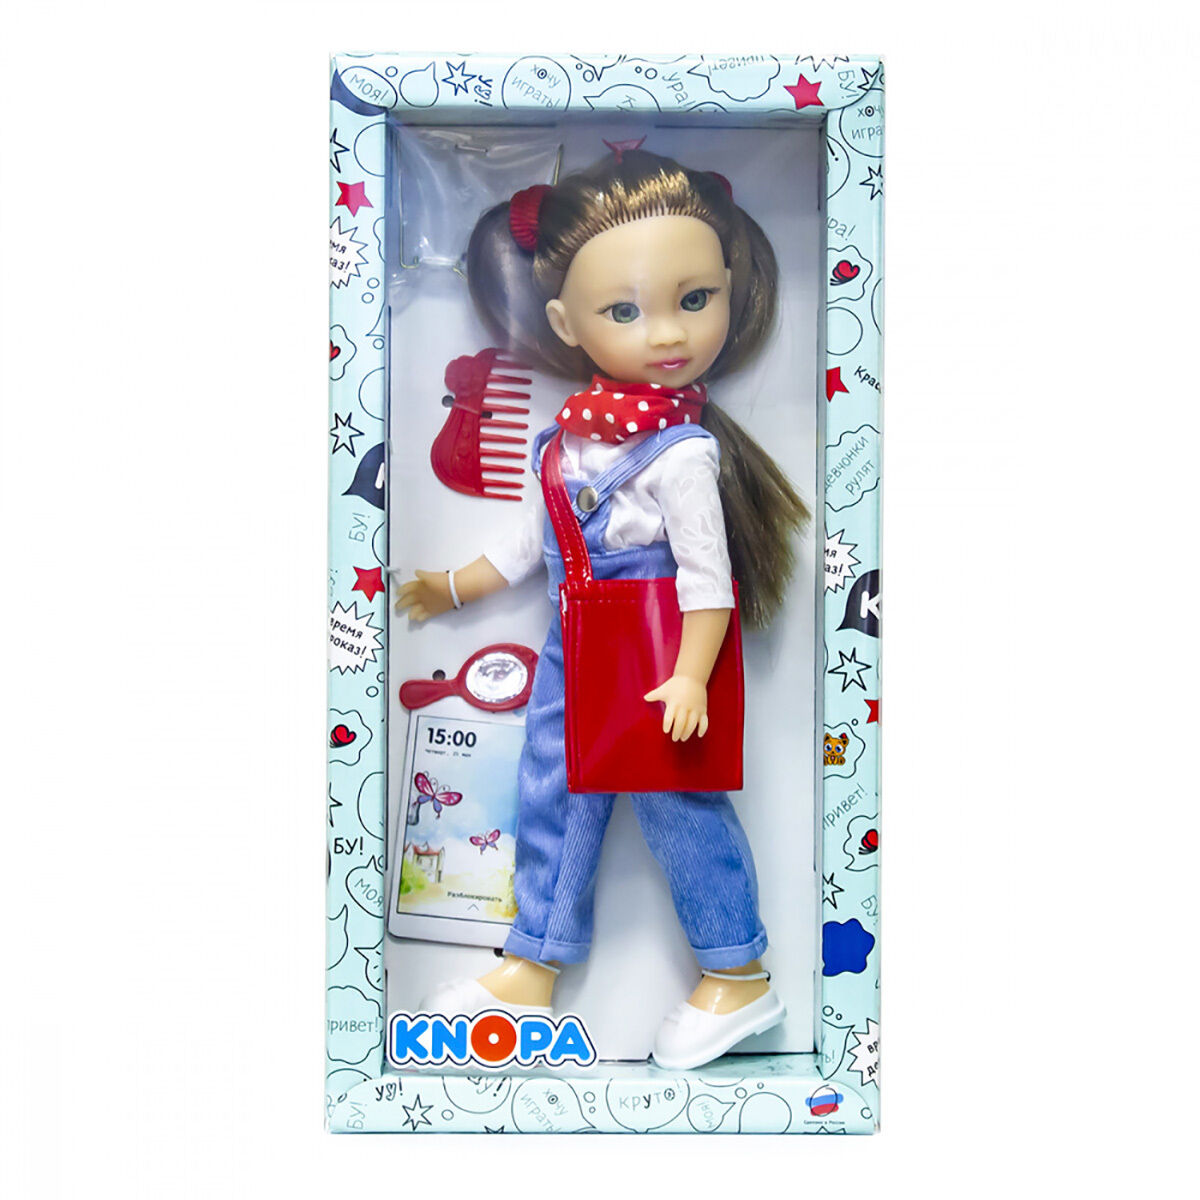 Кукла Мишель на пленэре (в коробке), 36 см.